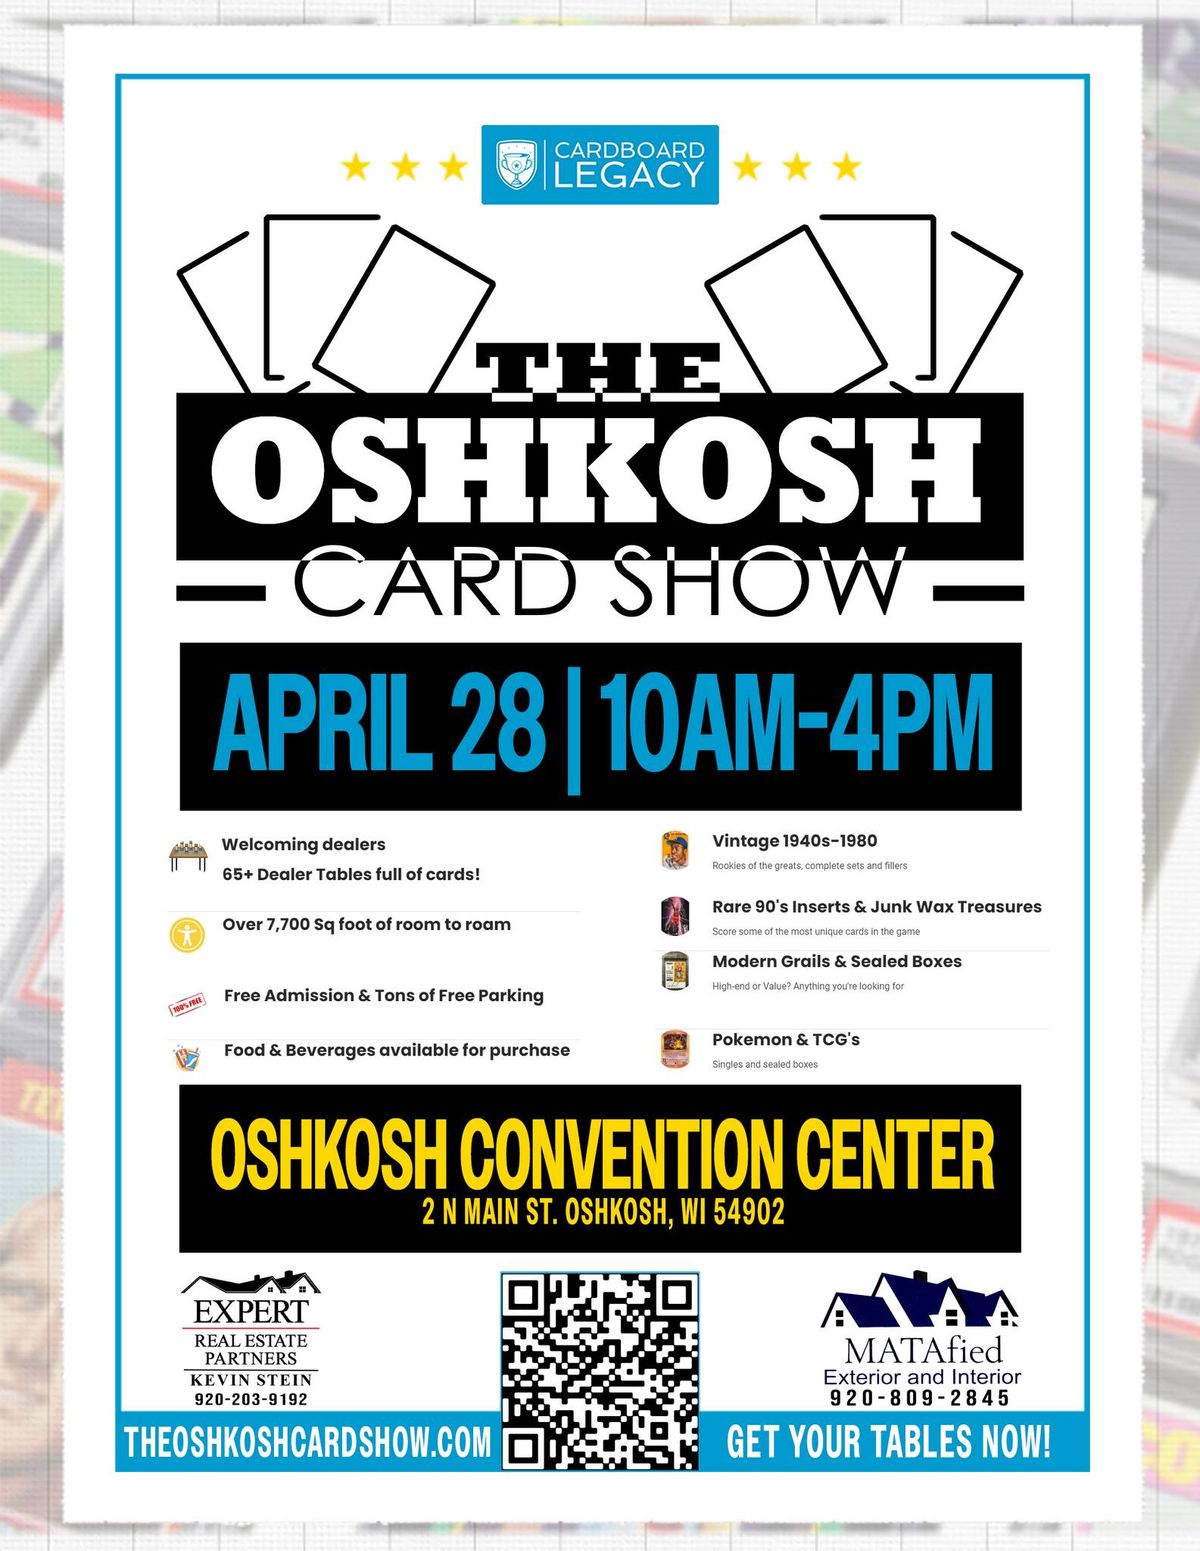 The Oshkosh Card Show